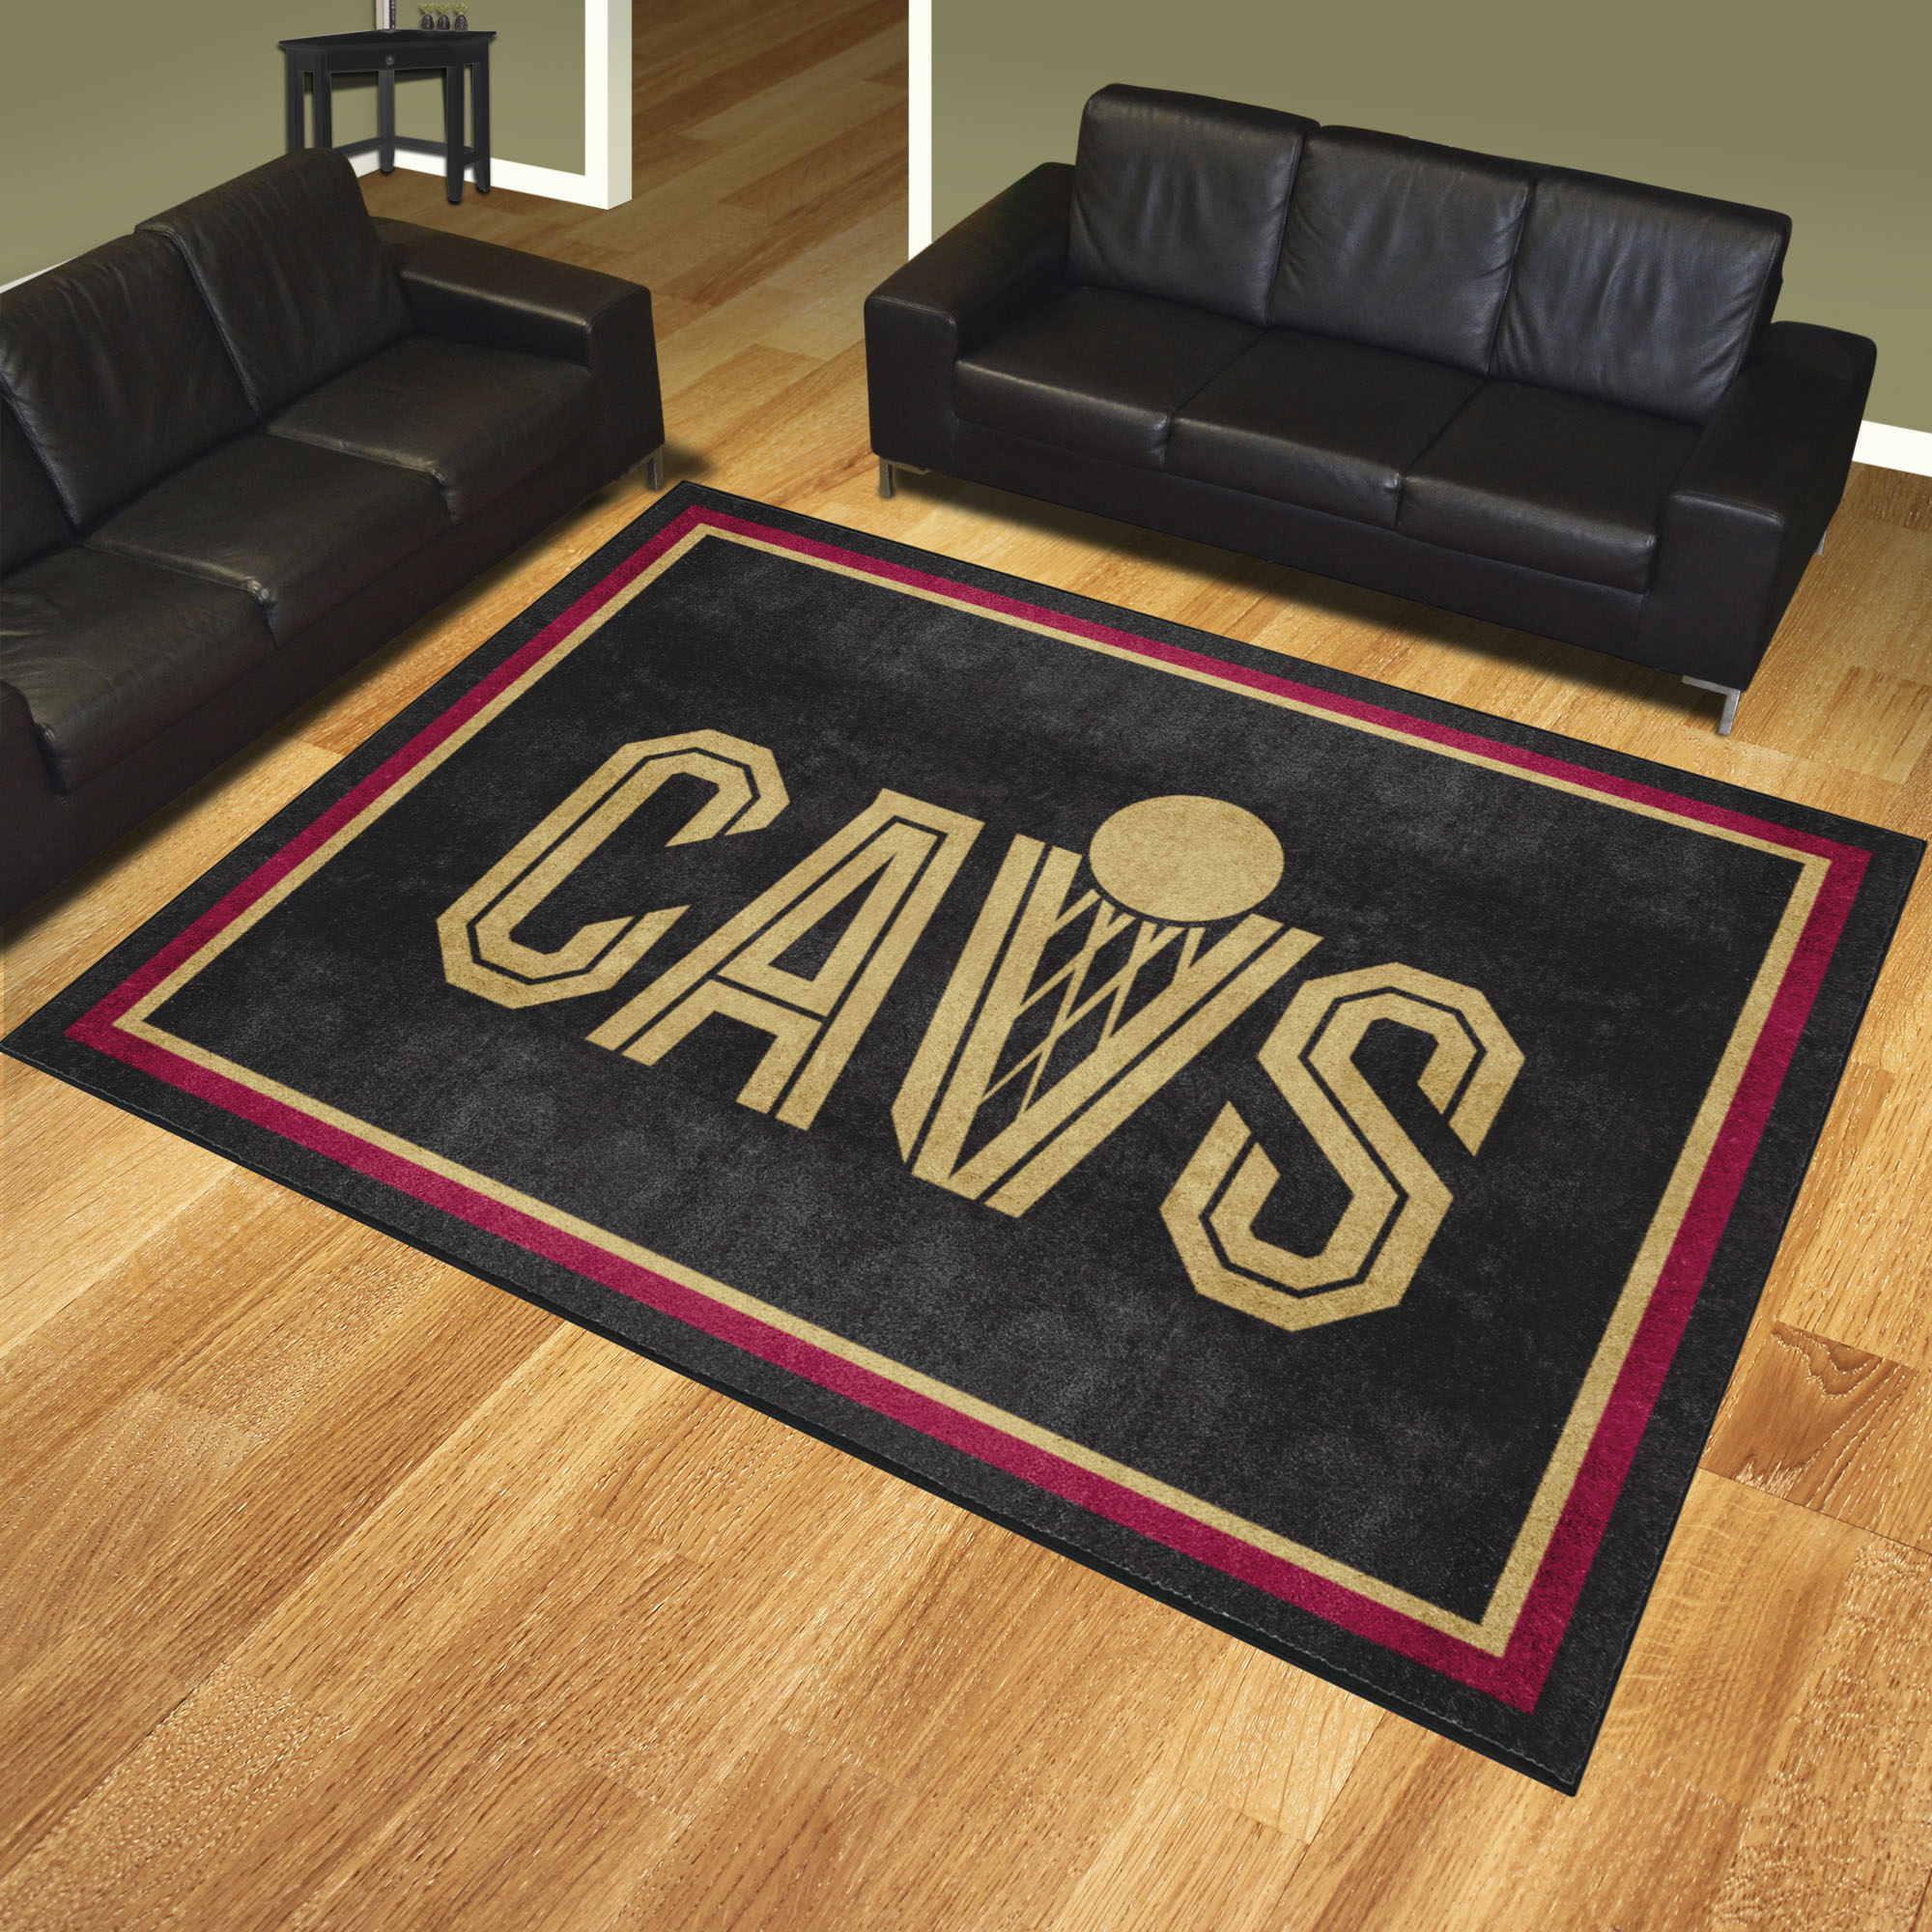 Cleveland Cavaliers Area Rug - 8' x 10' Alt Logo Nylon